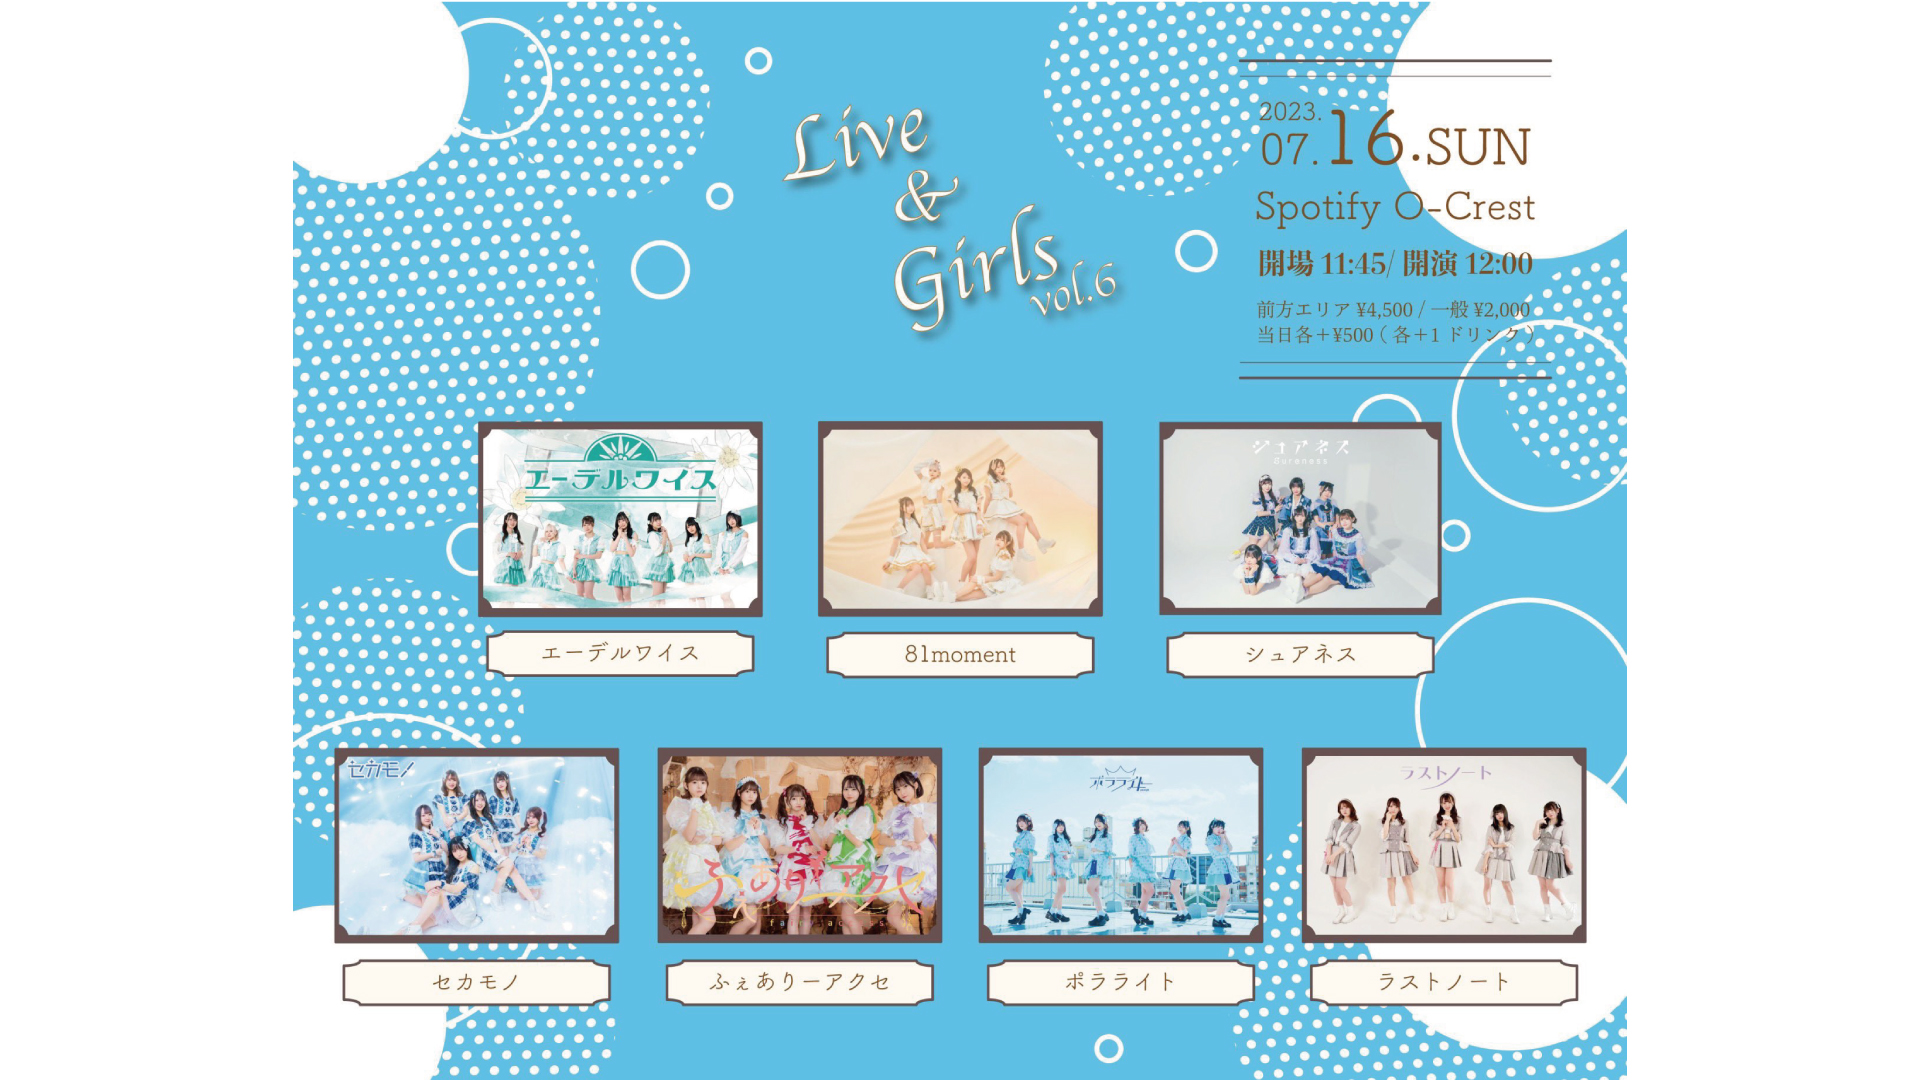 2023/7/16 『Live&Girls vol.6』